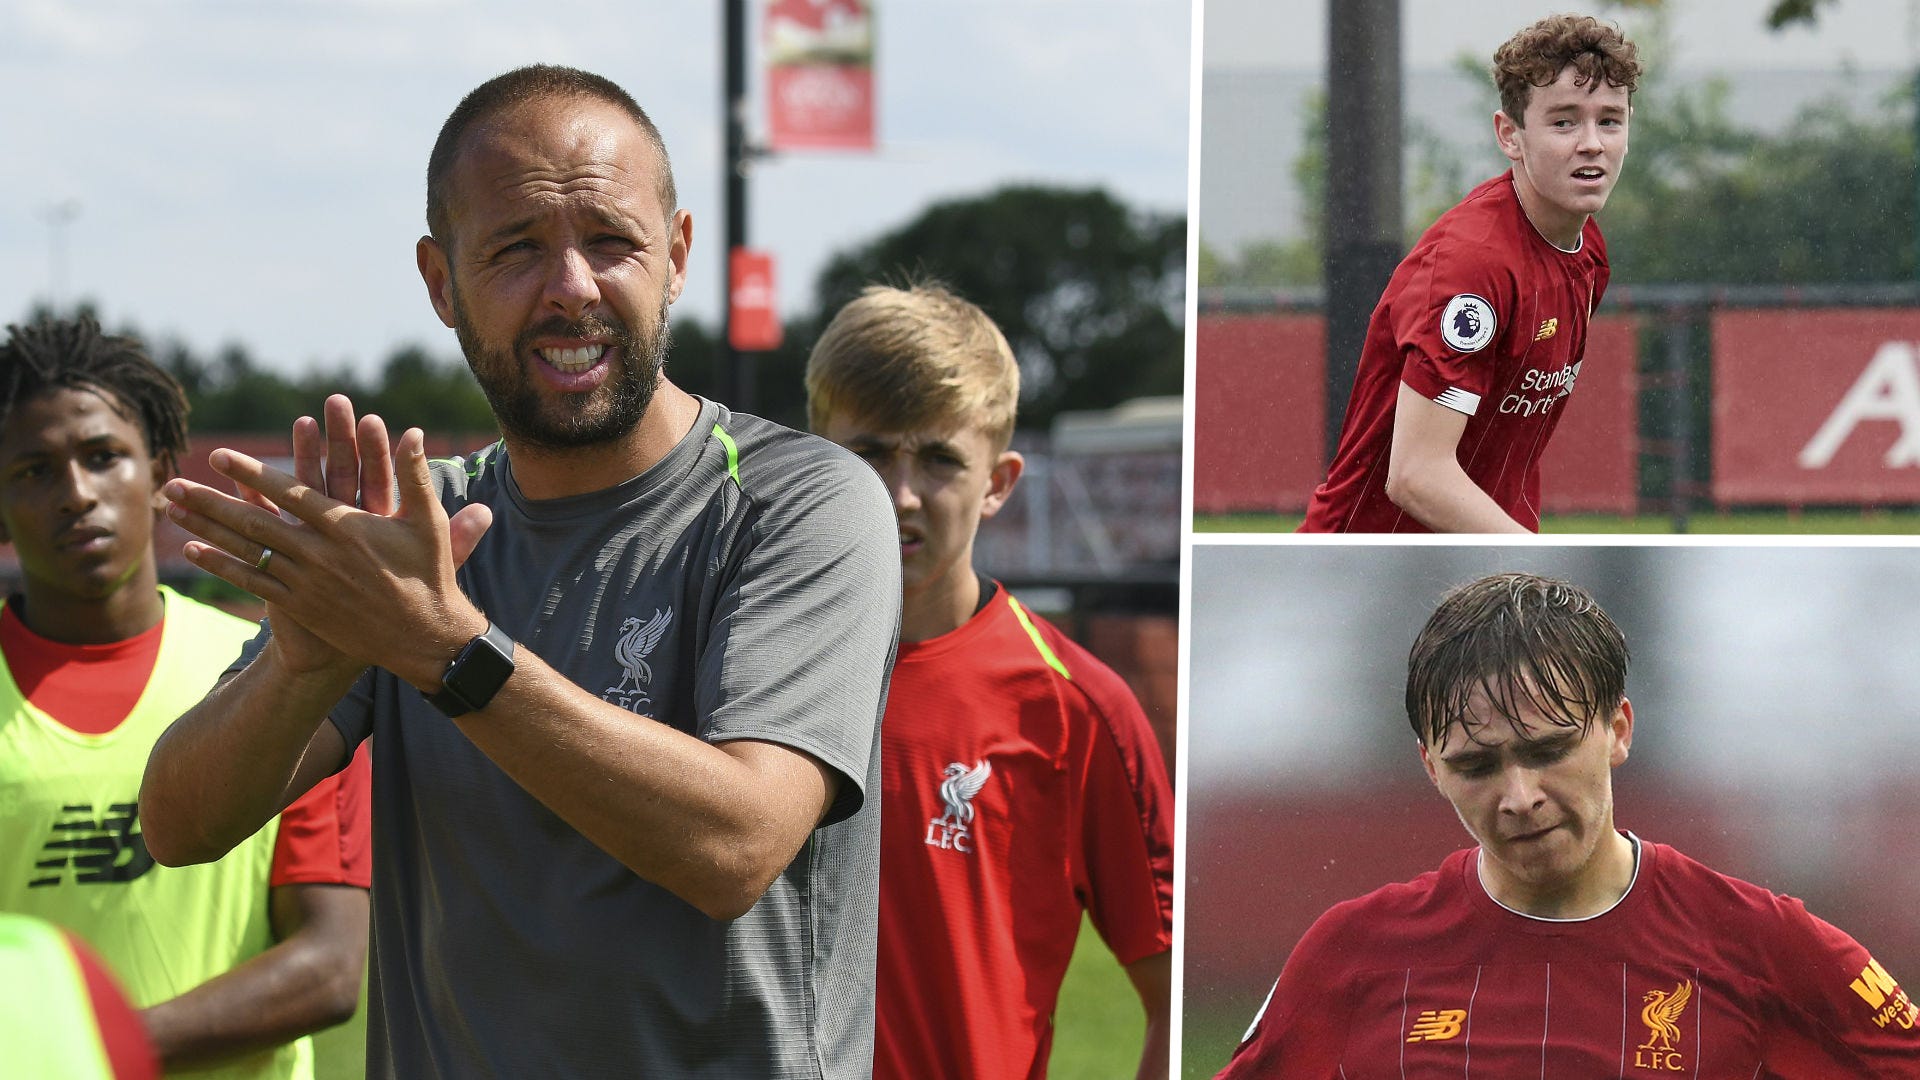 Afscheid Immuniteit deelnemen Liverpool's top teenage talents: Norris and Hill head latest group of  Academy stars | Goal.com